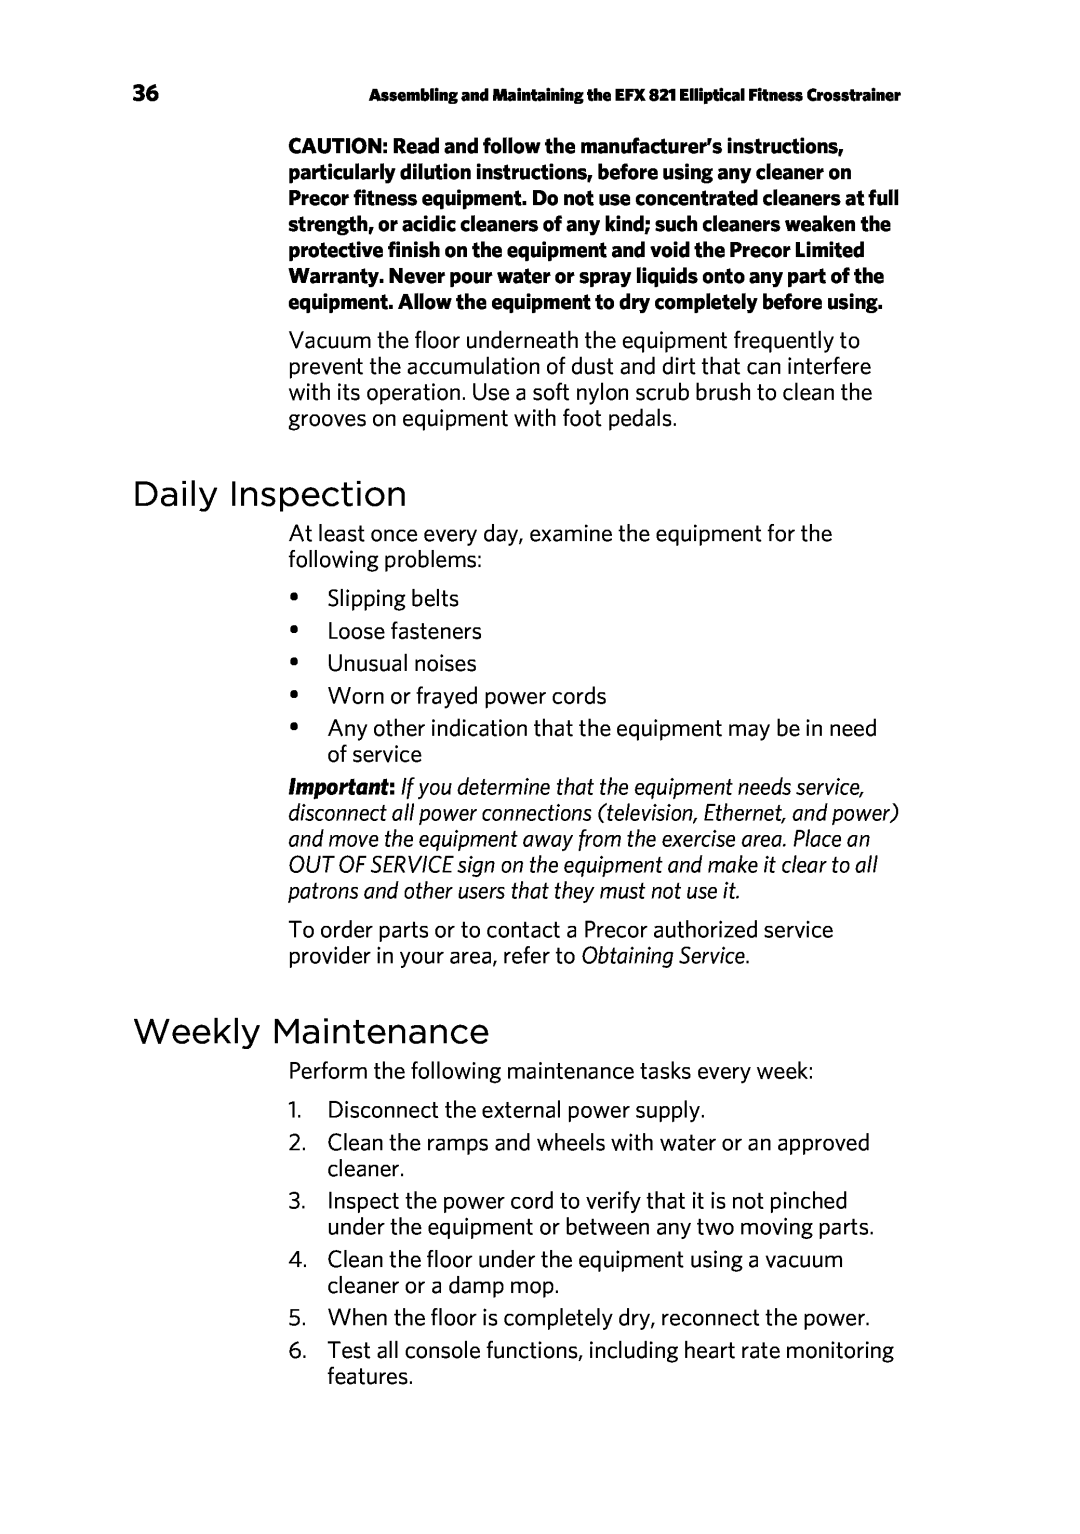 Precor 300753-201 manual Daily Inspection, Weekly Maintenance 